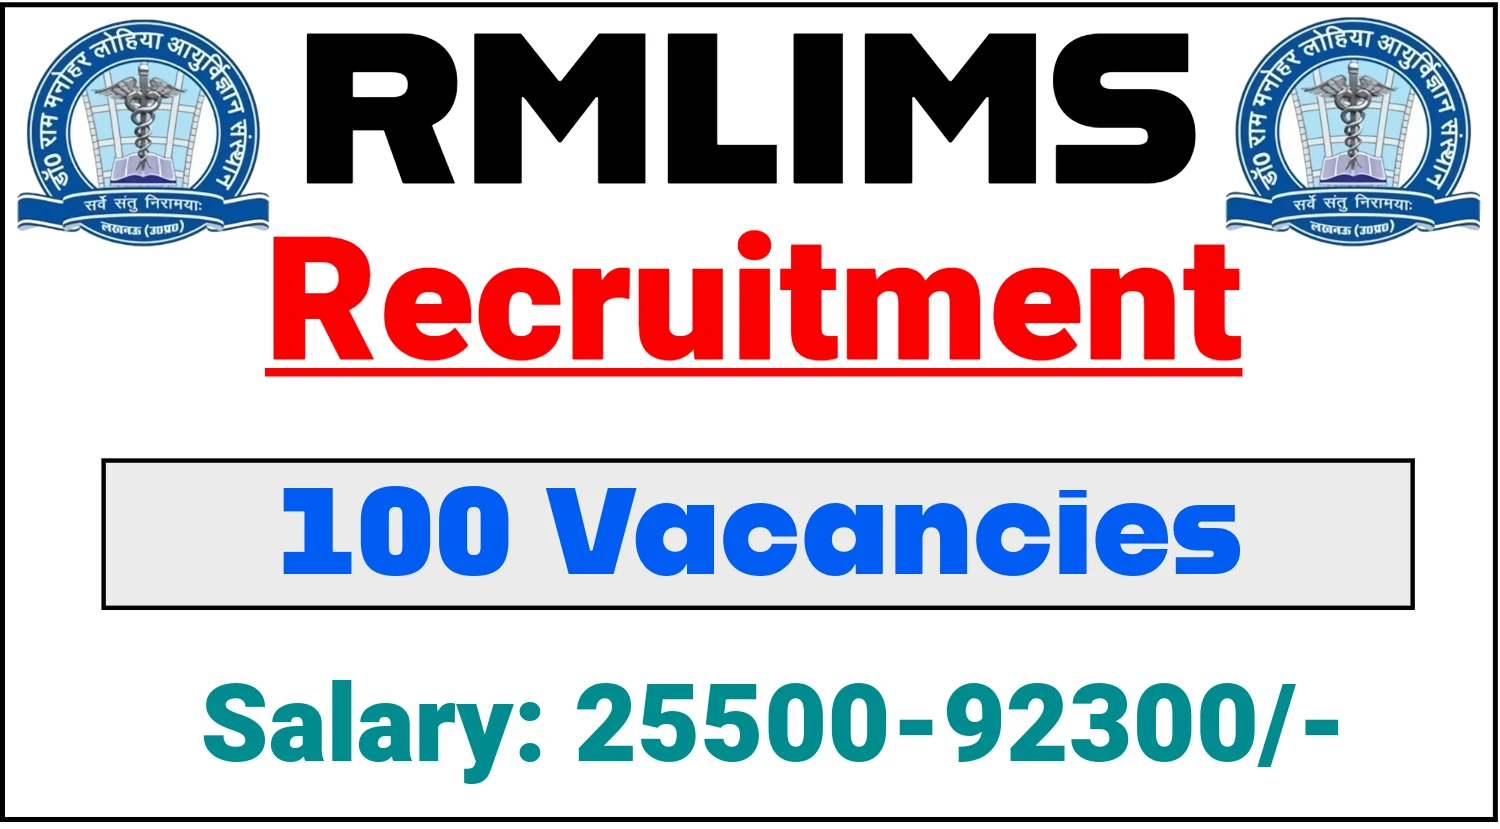 RMLIMS Recruitment 2024